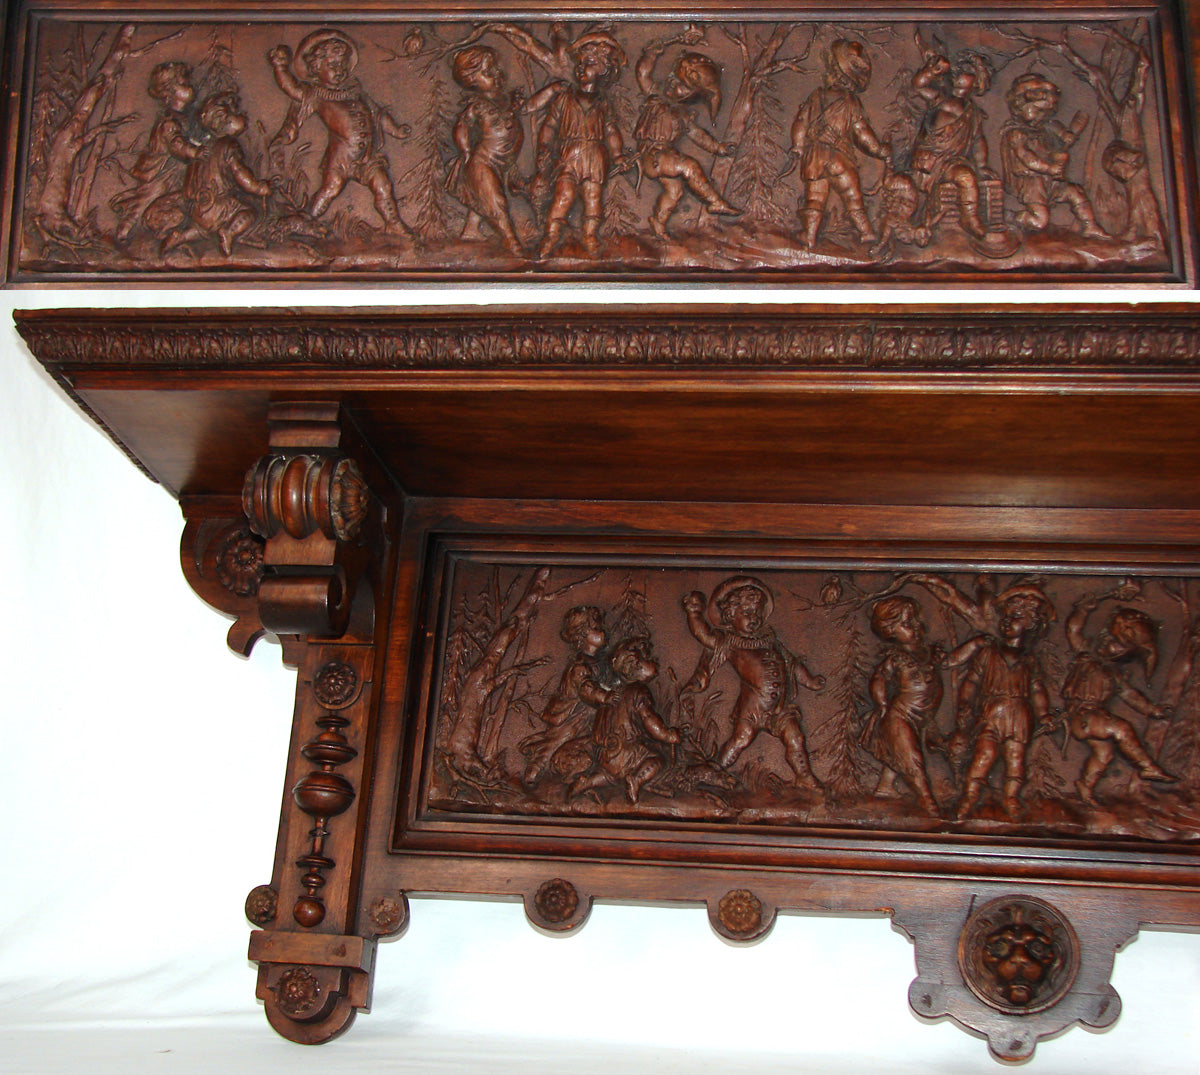 Stunning Hand Carved Antique 46" Bracket Shelf, c.1850s French Figural Masterpiece Furniture